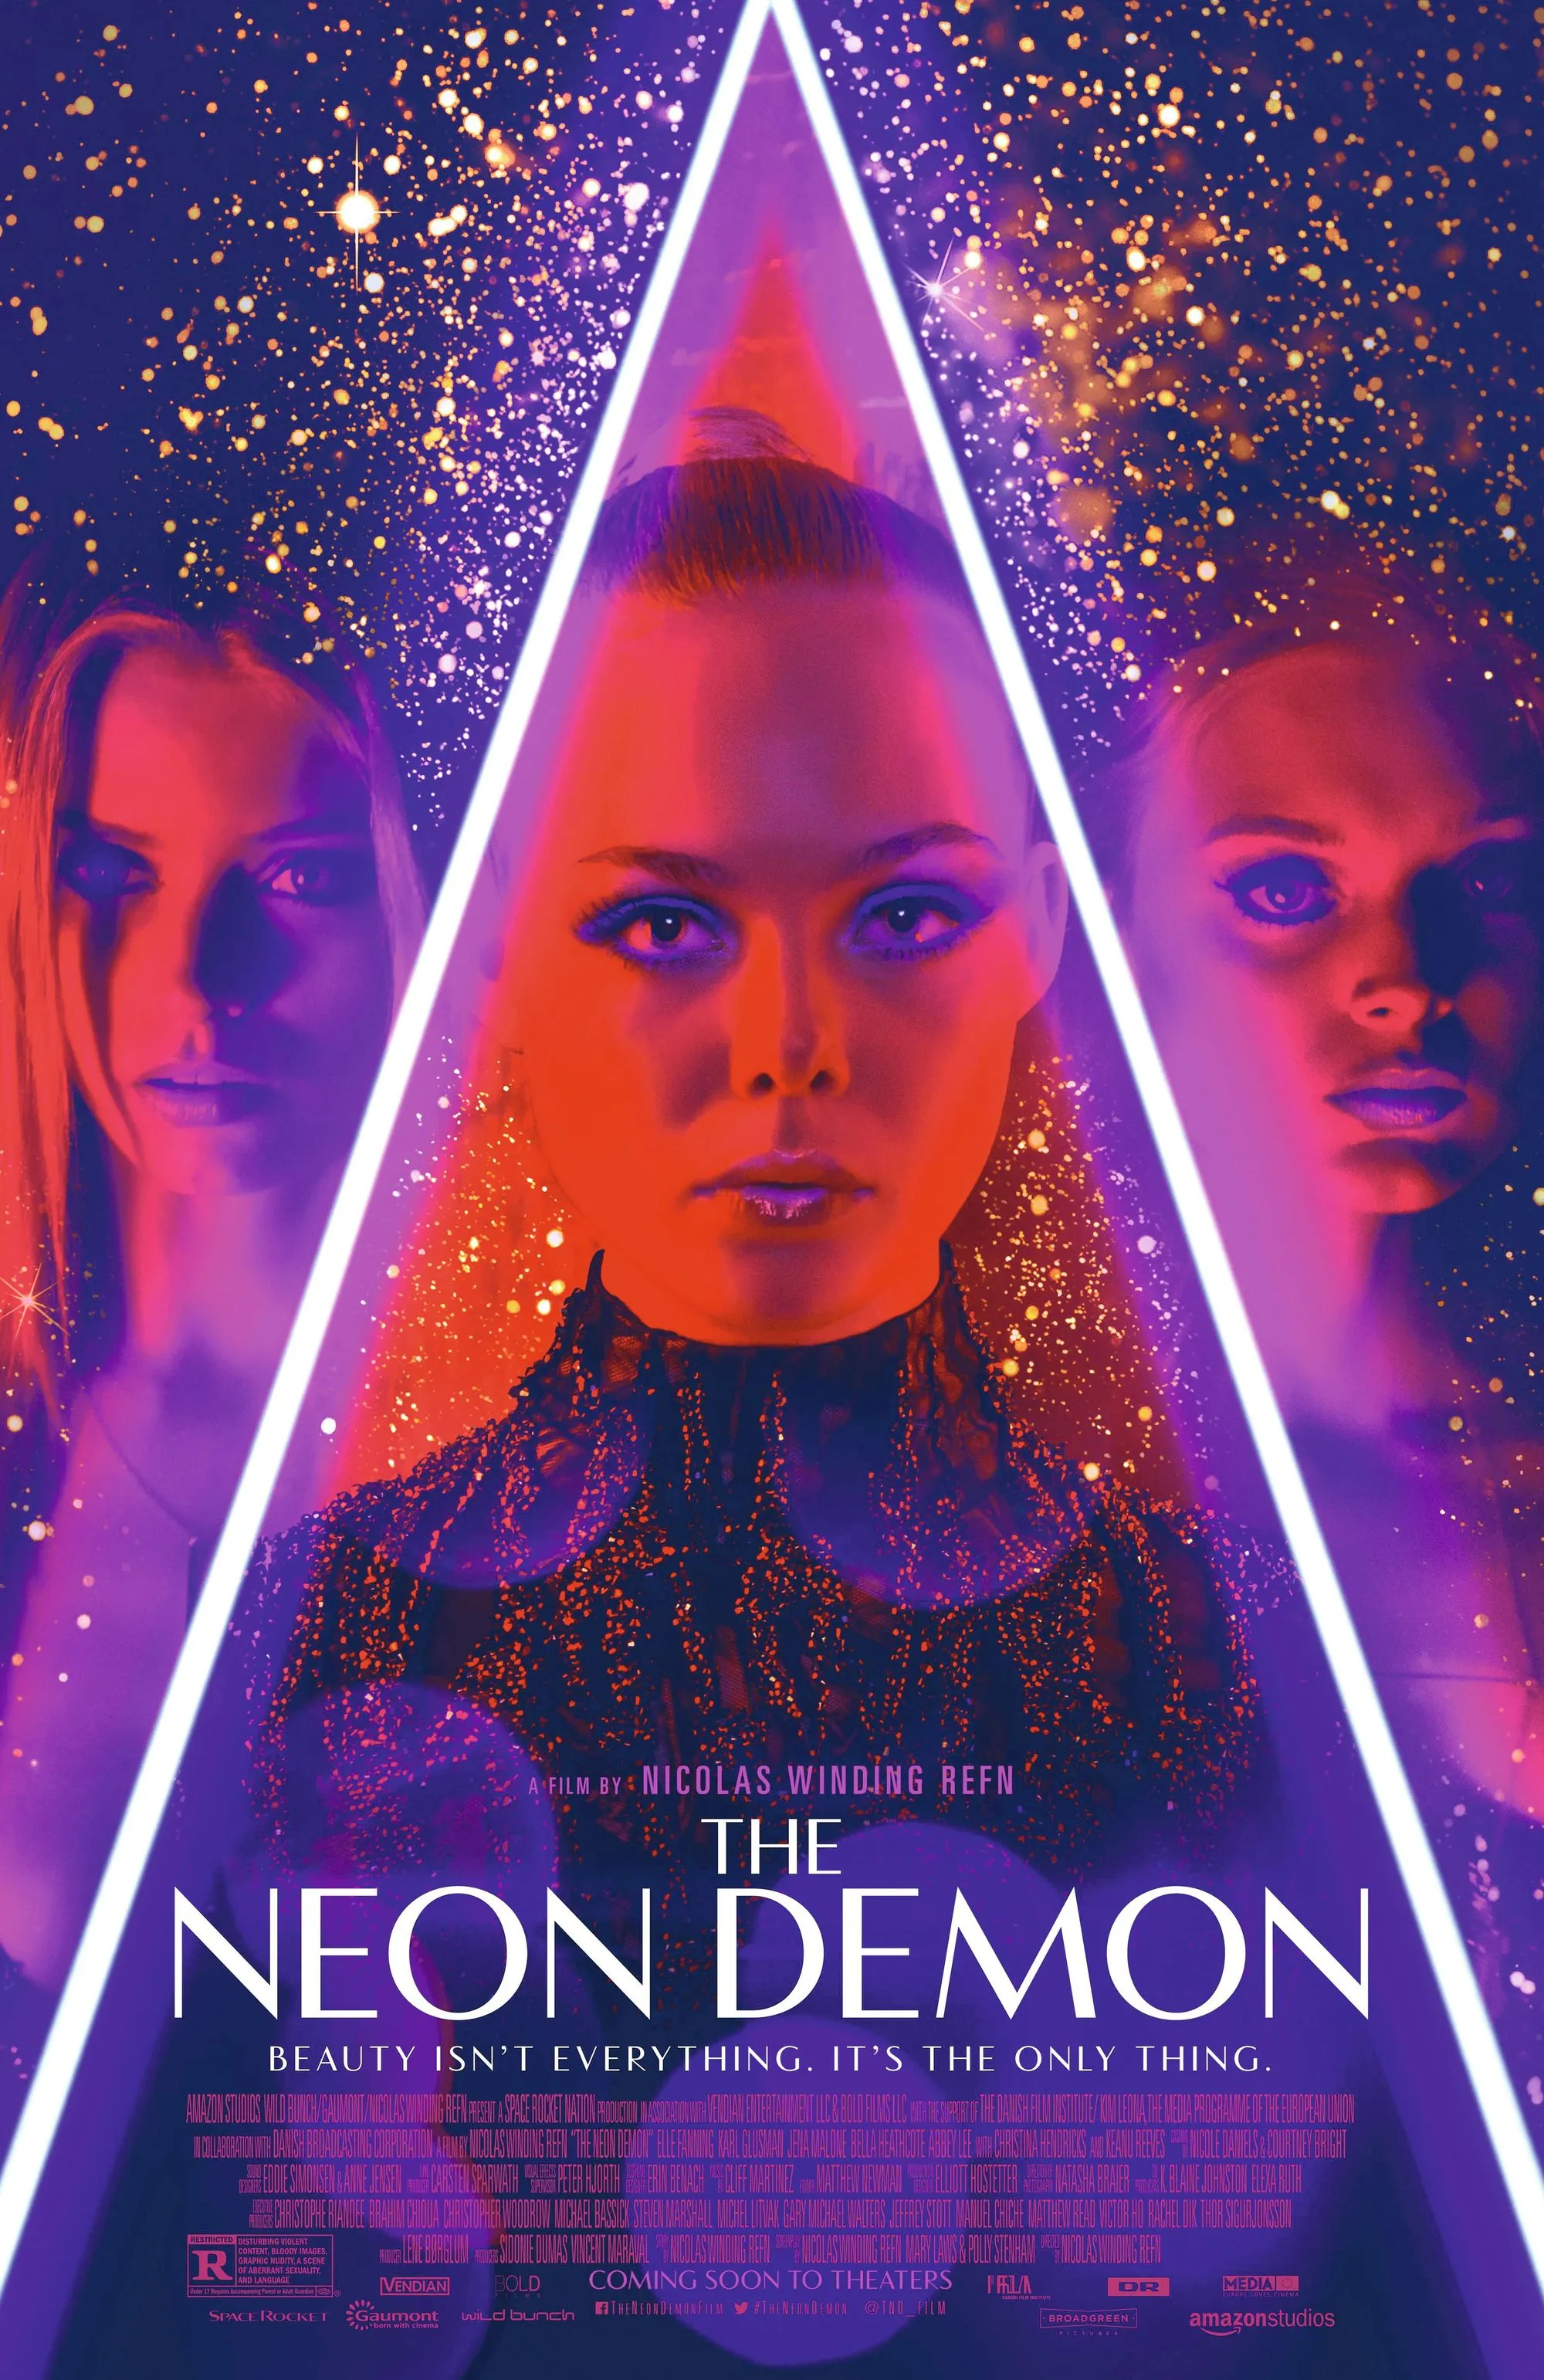 The Neon Demon, by Nicolas Winding Refn, 2016.